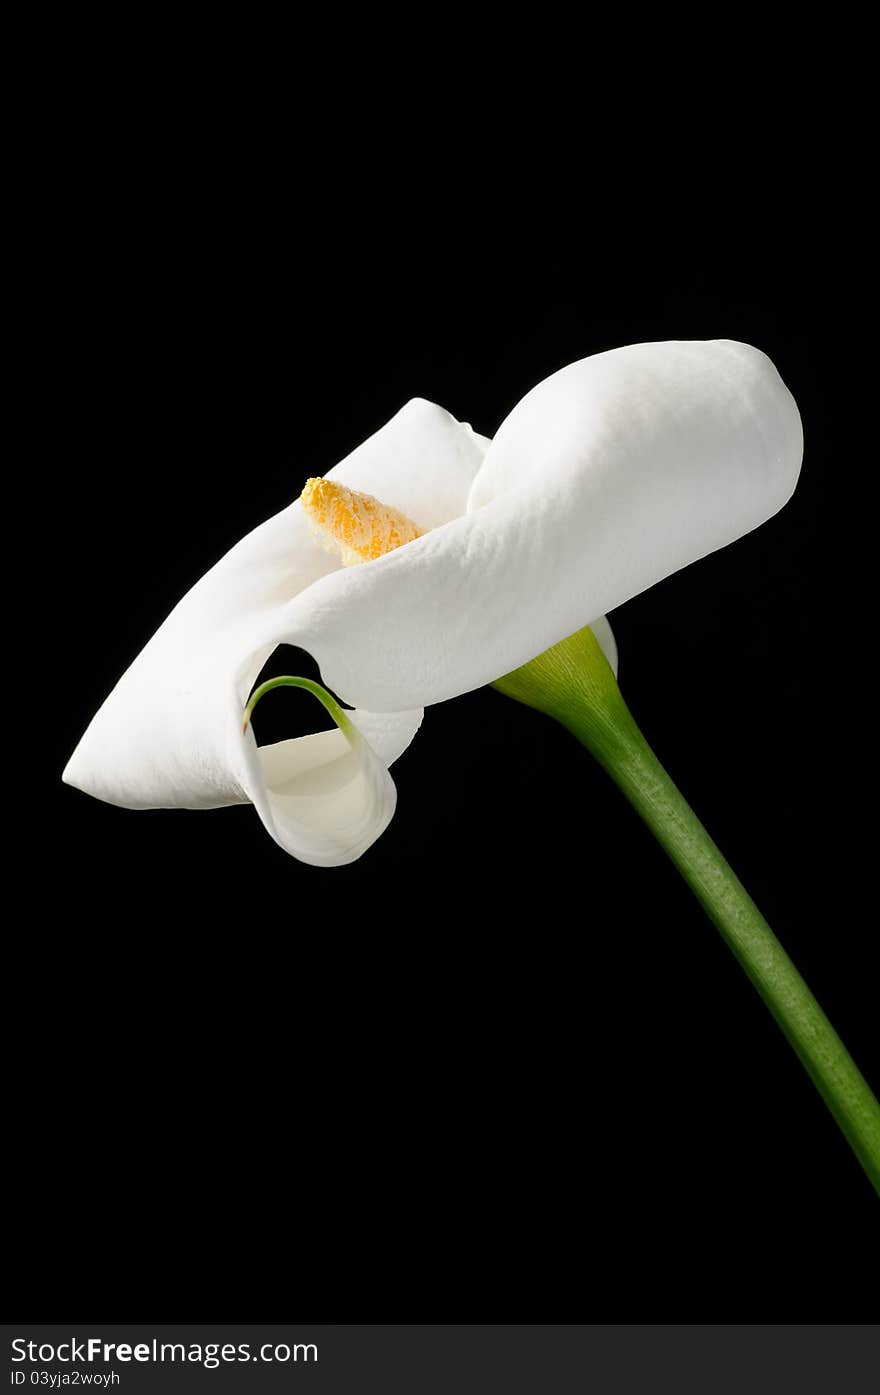 A beautiful white calla lily (zantedeschia) on a black background